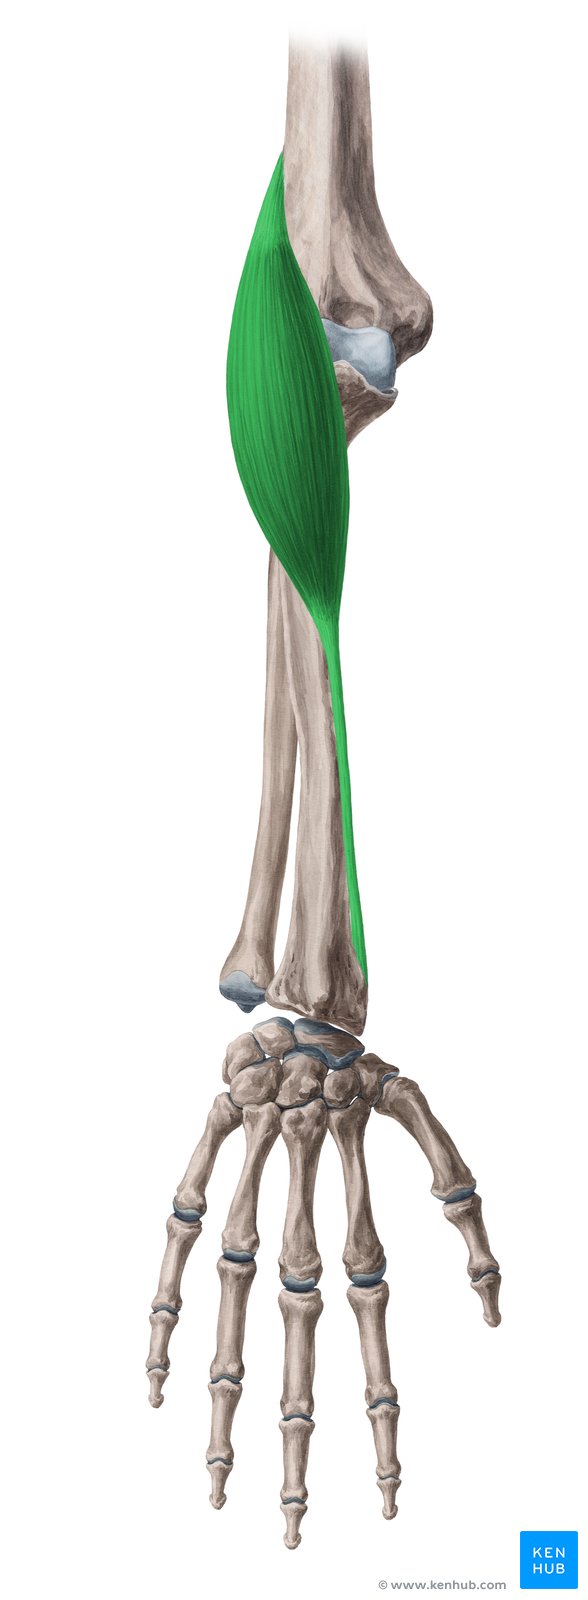 Brachioradialis - pronated forearm